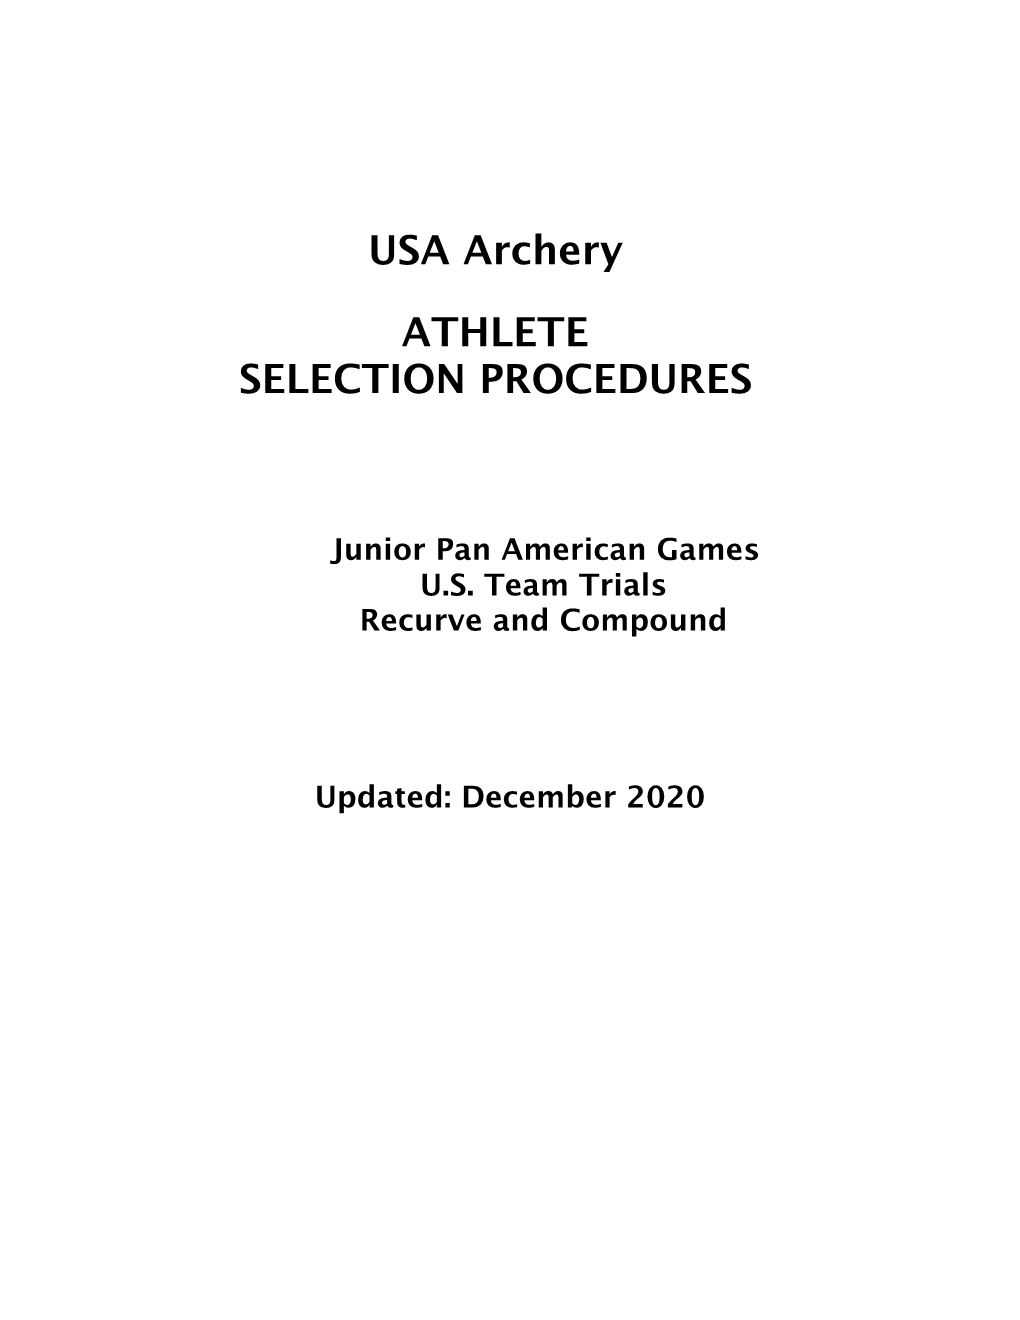 USA Archery ATHLETE SELECTION PROCEDURES